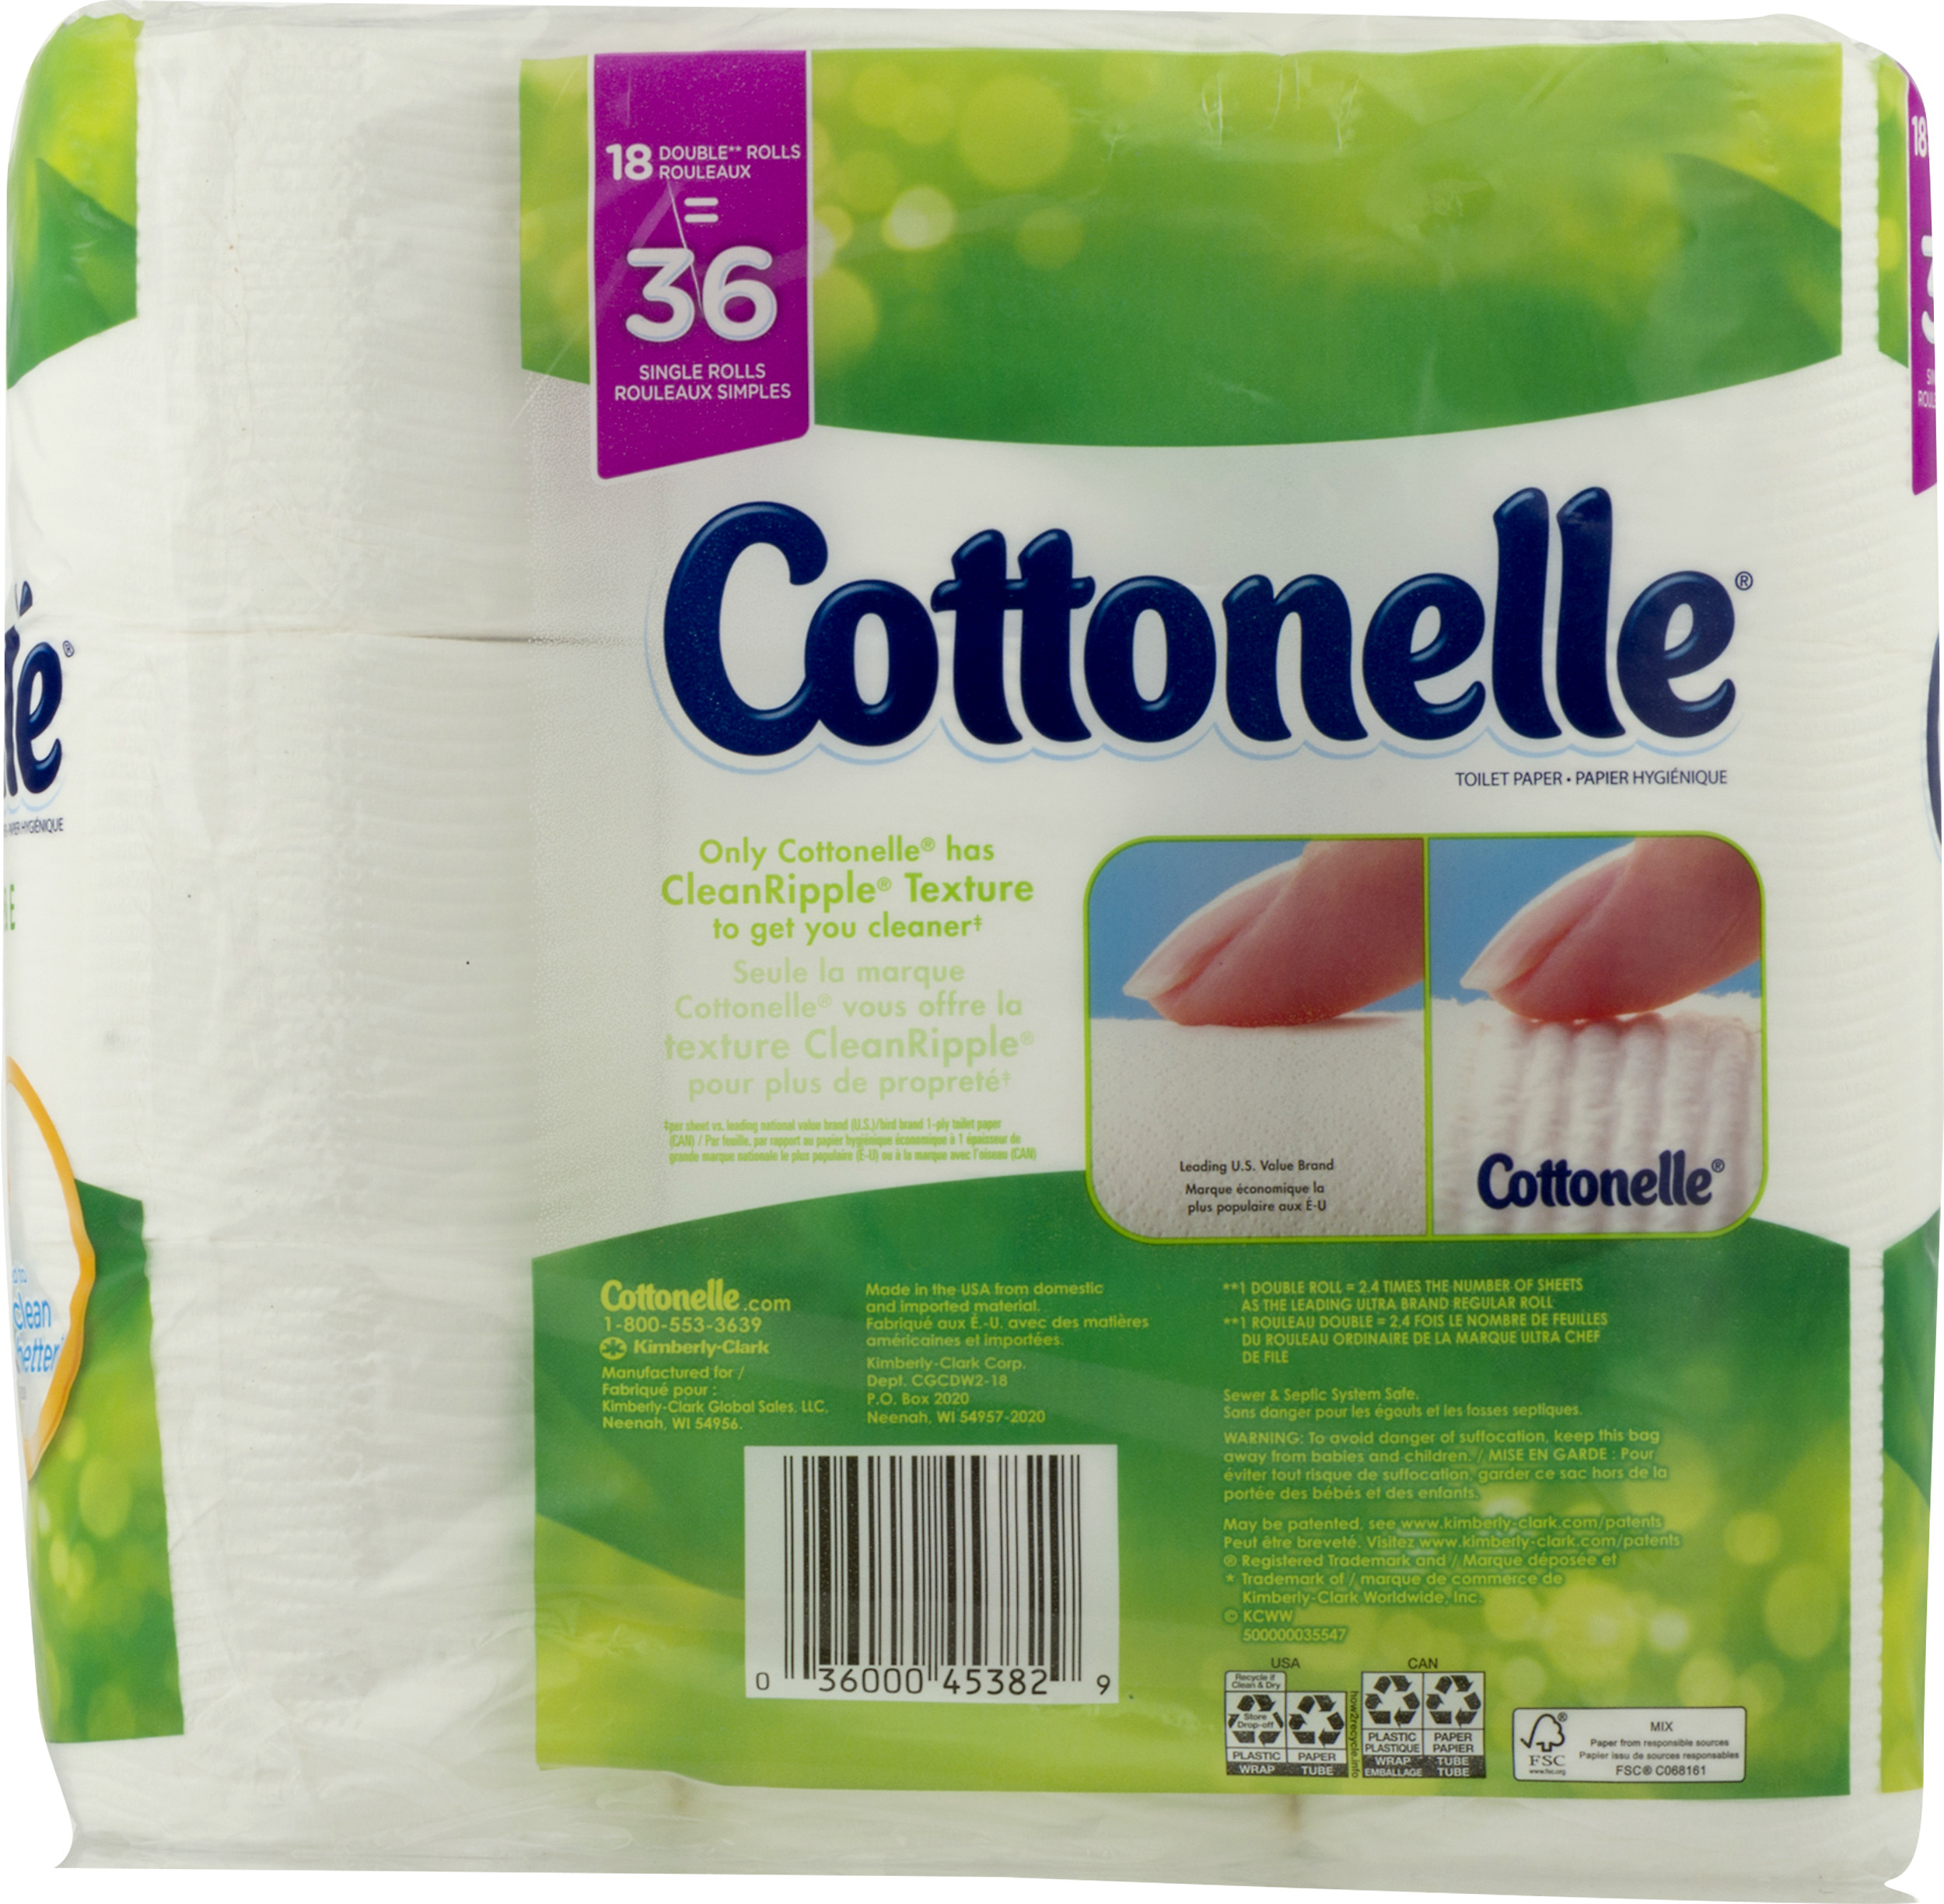 Cottonelle Gentle Care Toilet Paper, 18 Double Rolls - image 5 of 5